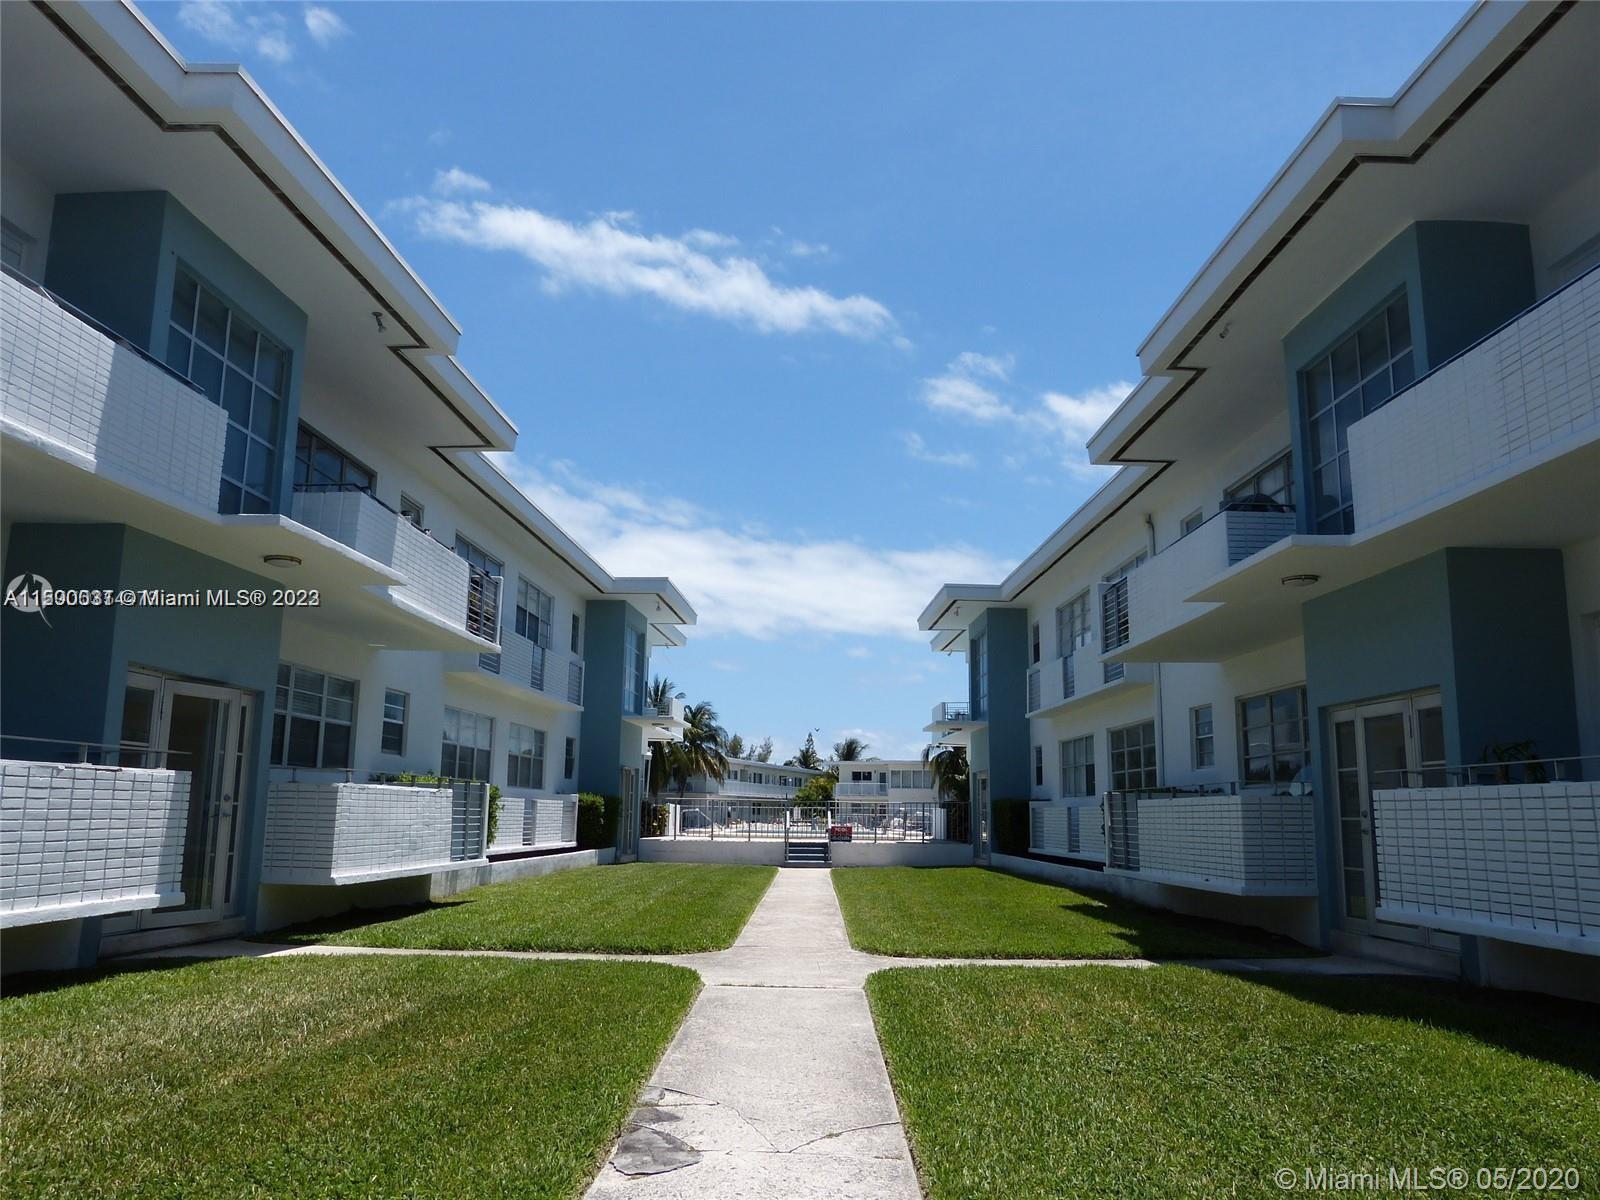 Property for Sale at 200 S Shore Dr 7, Miami Beach, Miami-Dade County, Florida - Bedrooms: 2 
Bathrooms: 2  - $389,000